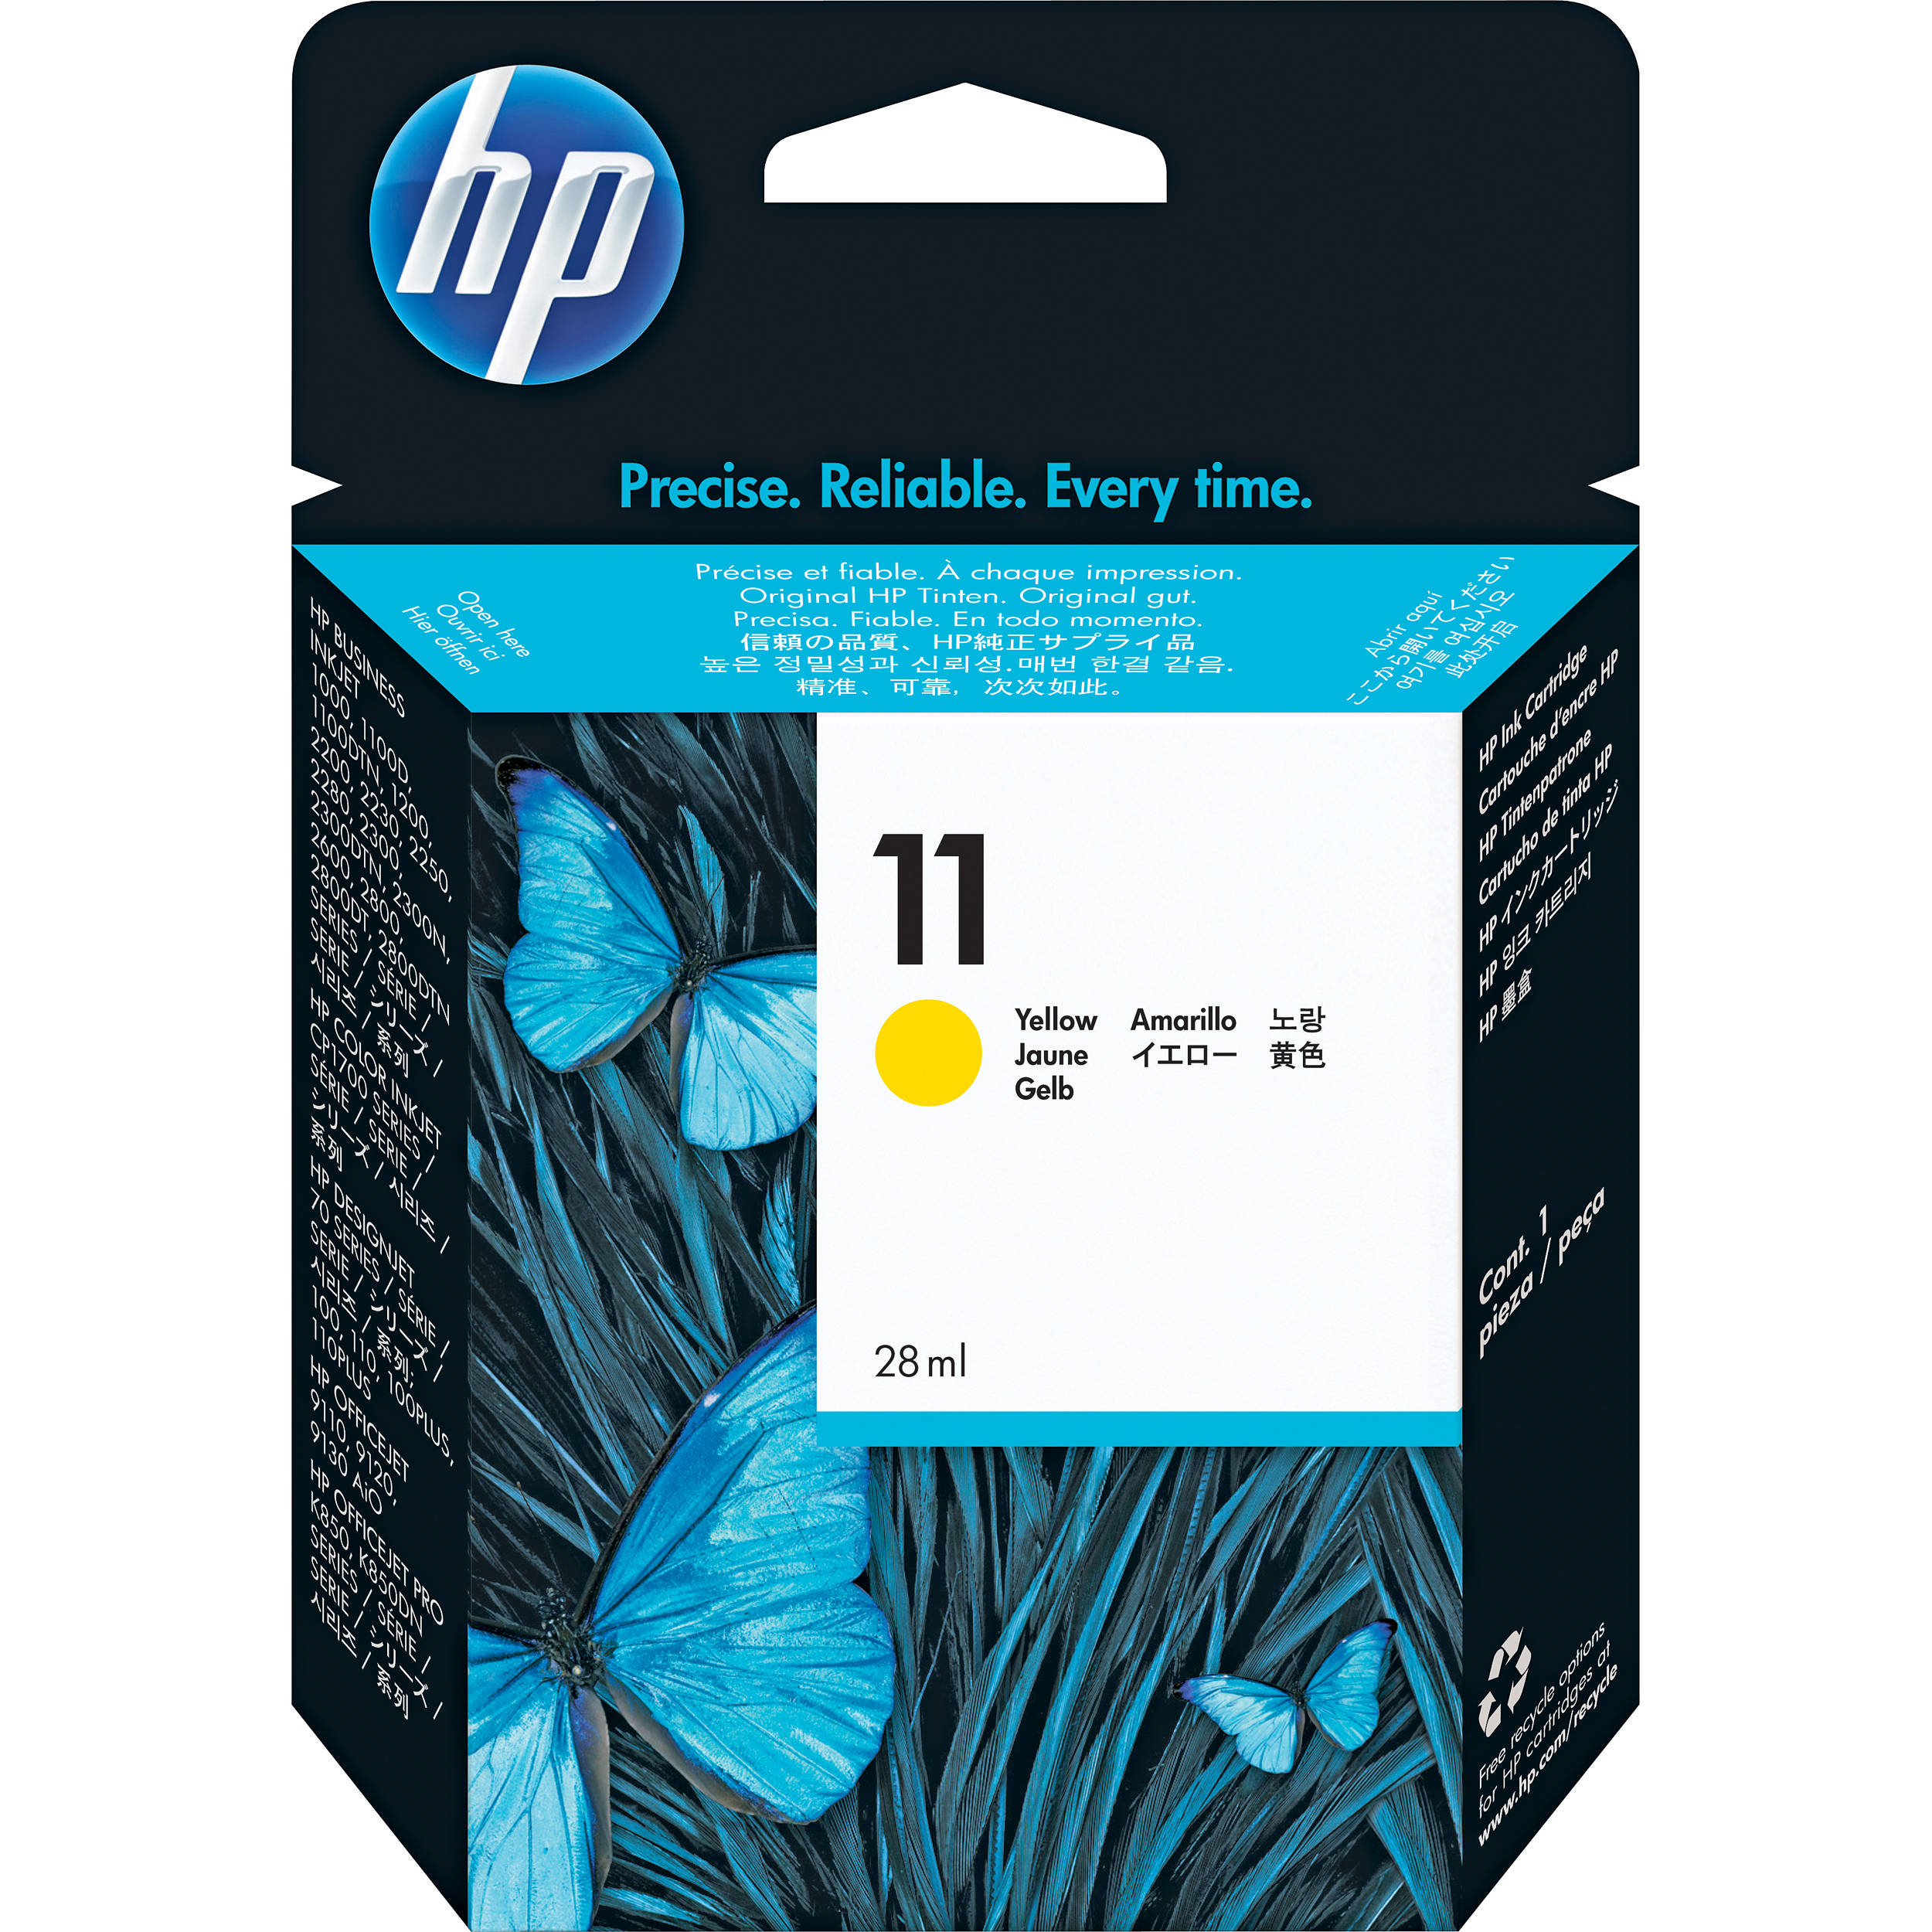 Ink for hp business inkjet 2800 printer